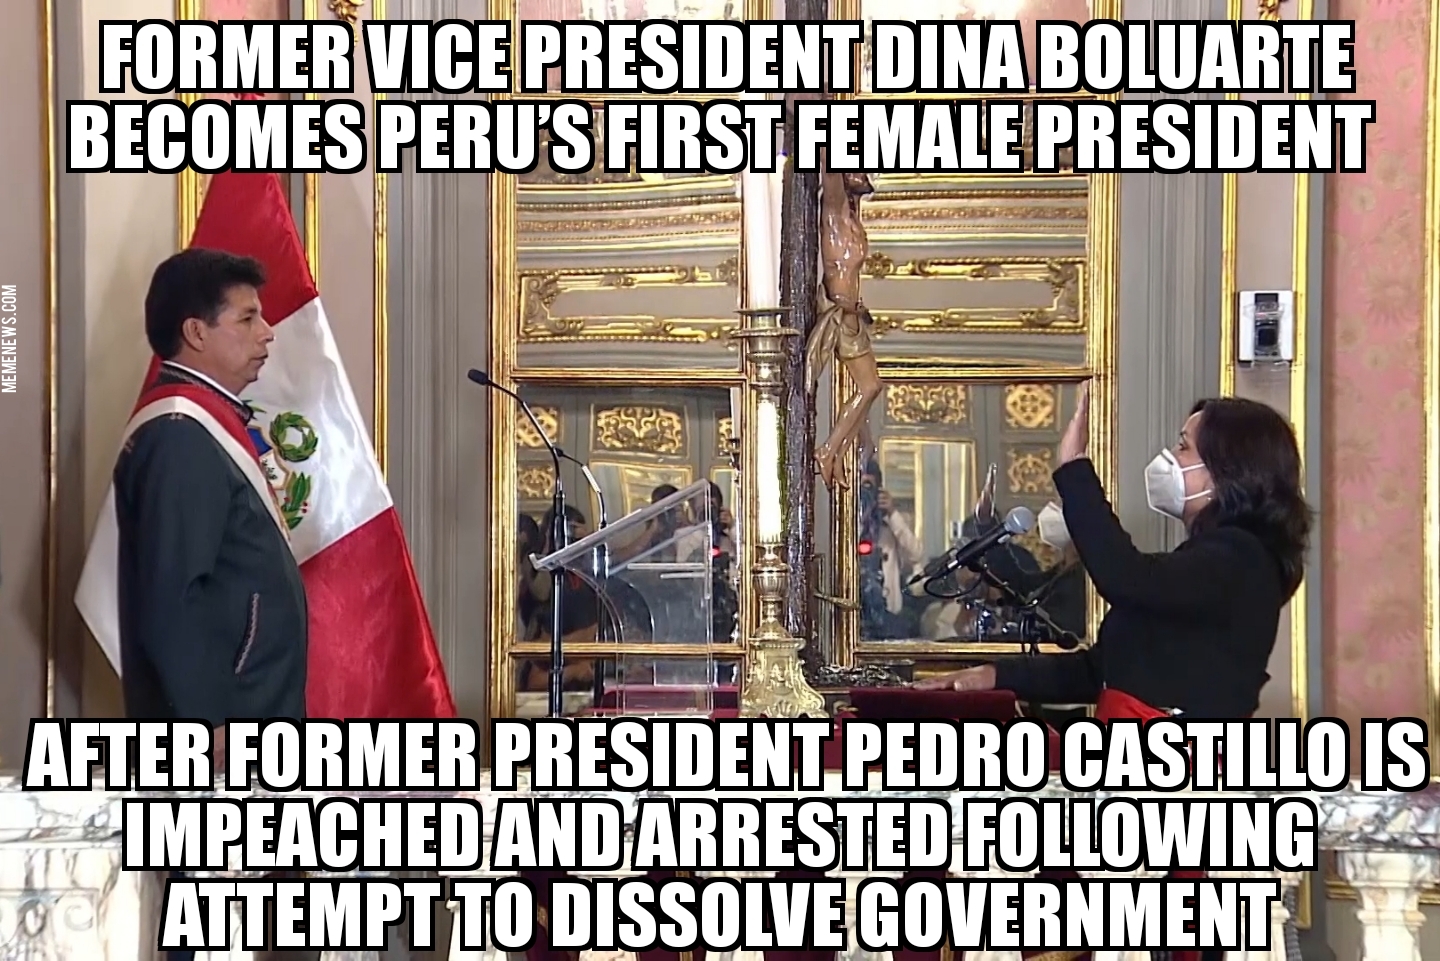 Peru President Castillo impeached, arrested